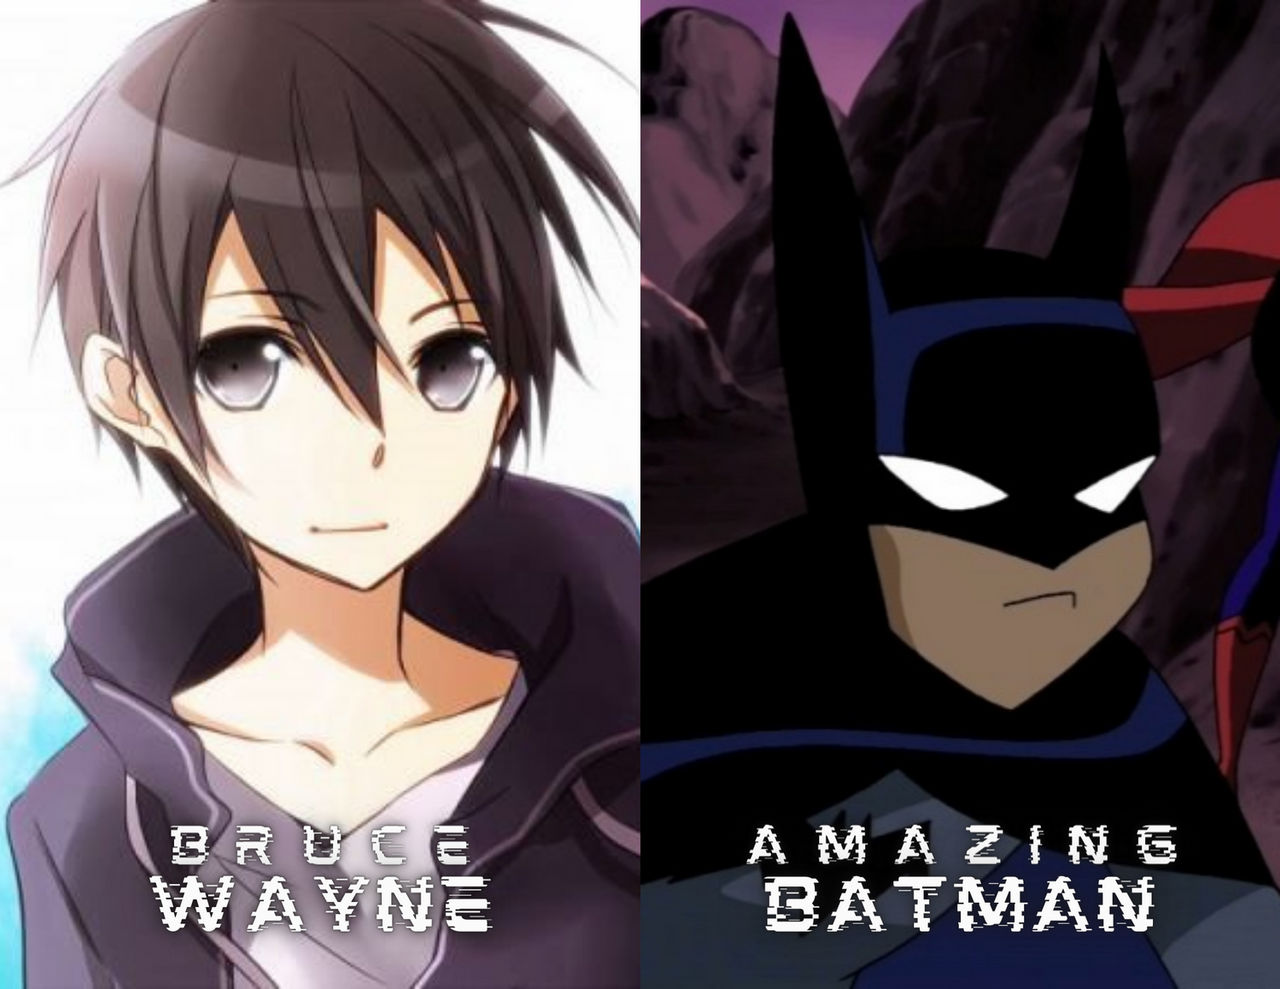 Bruce Wayne in the Amazing Batman by LupinMK on DeviantArt